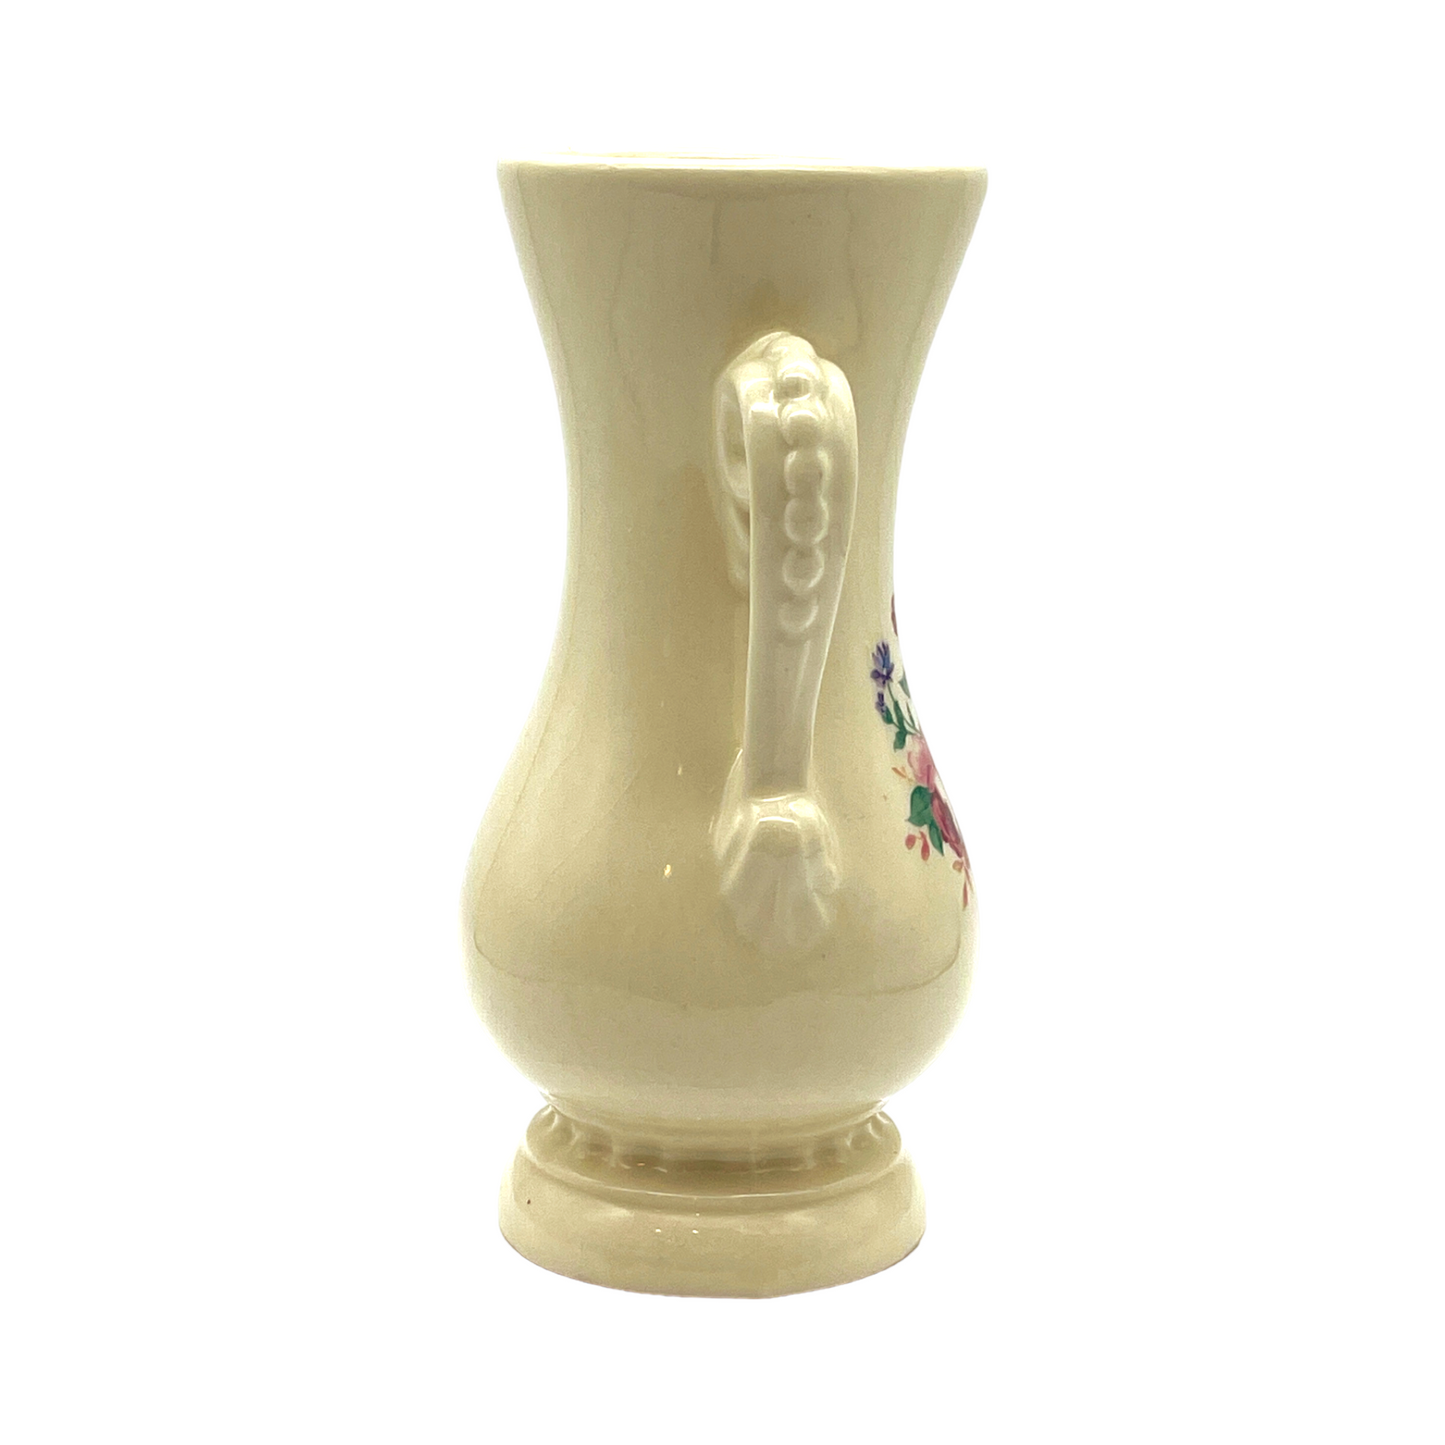 Royal Copley - Two Handle Decal Vase - Roses - Vintage - 6.25"